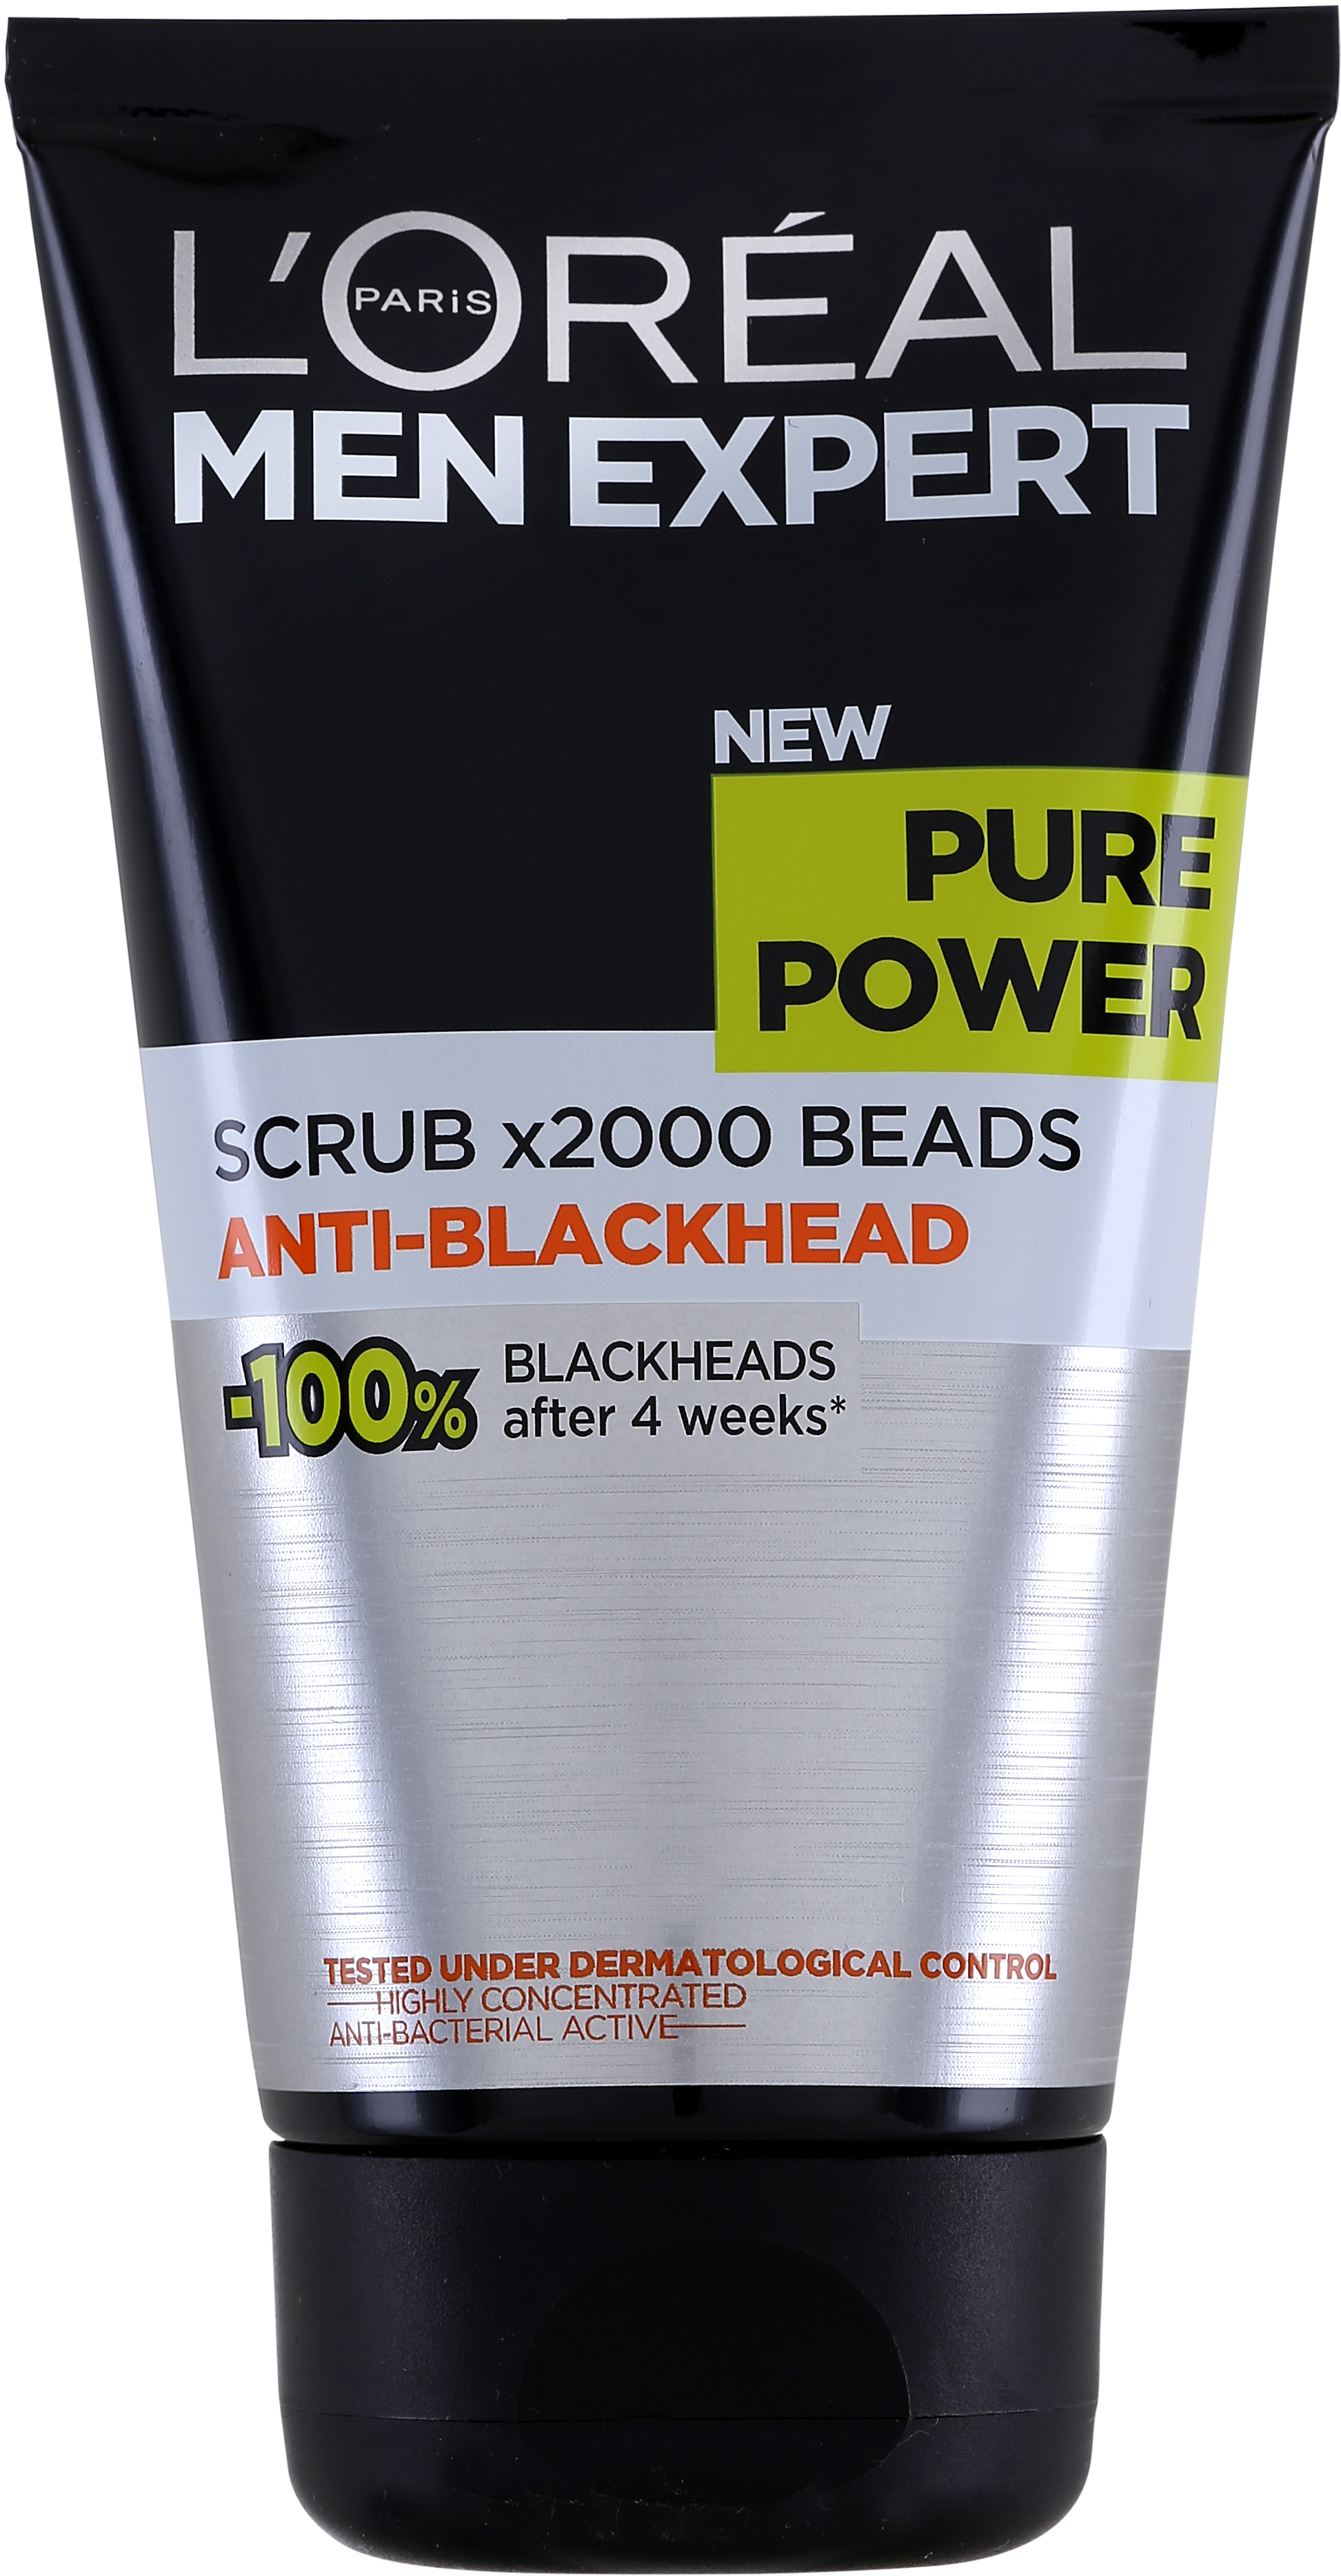 Loreal Men Expert Pure Power Anti-Blackhead Scrub